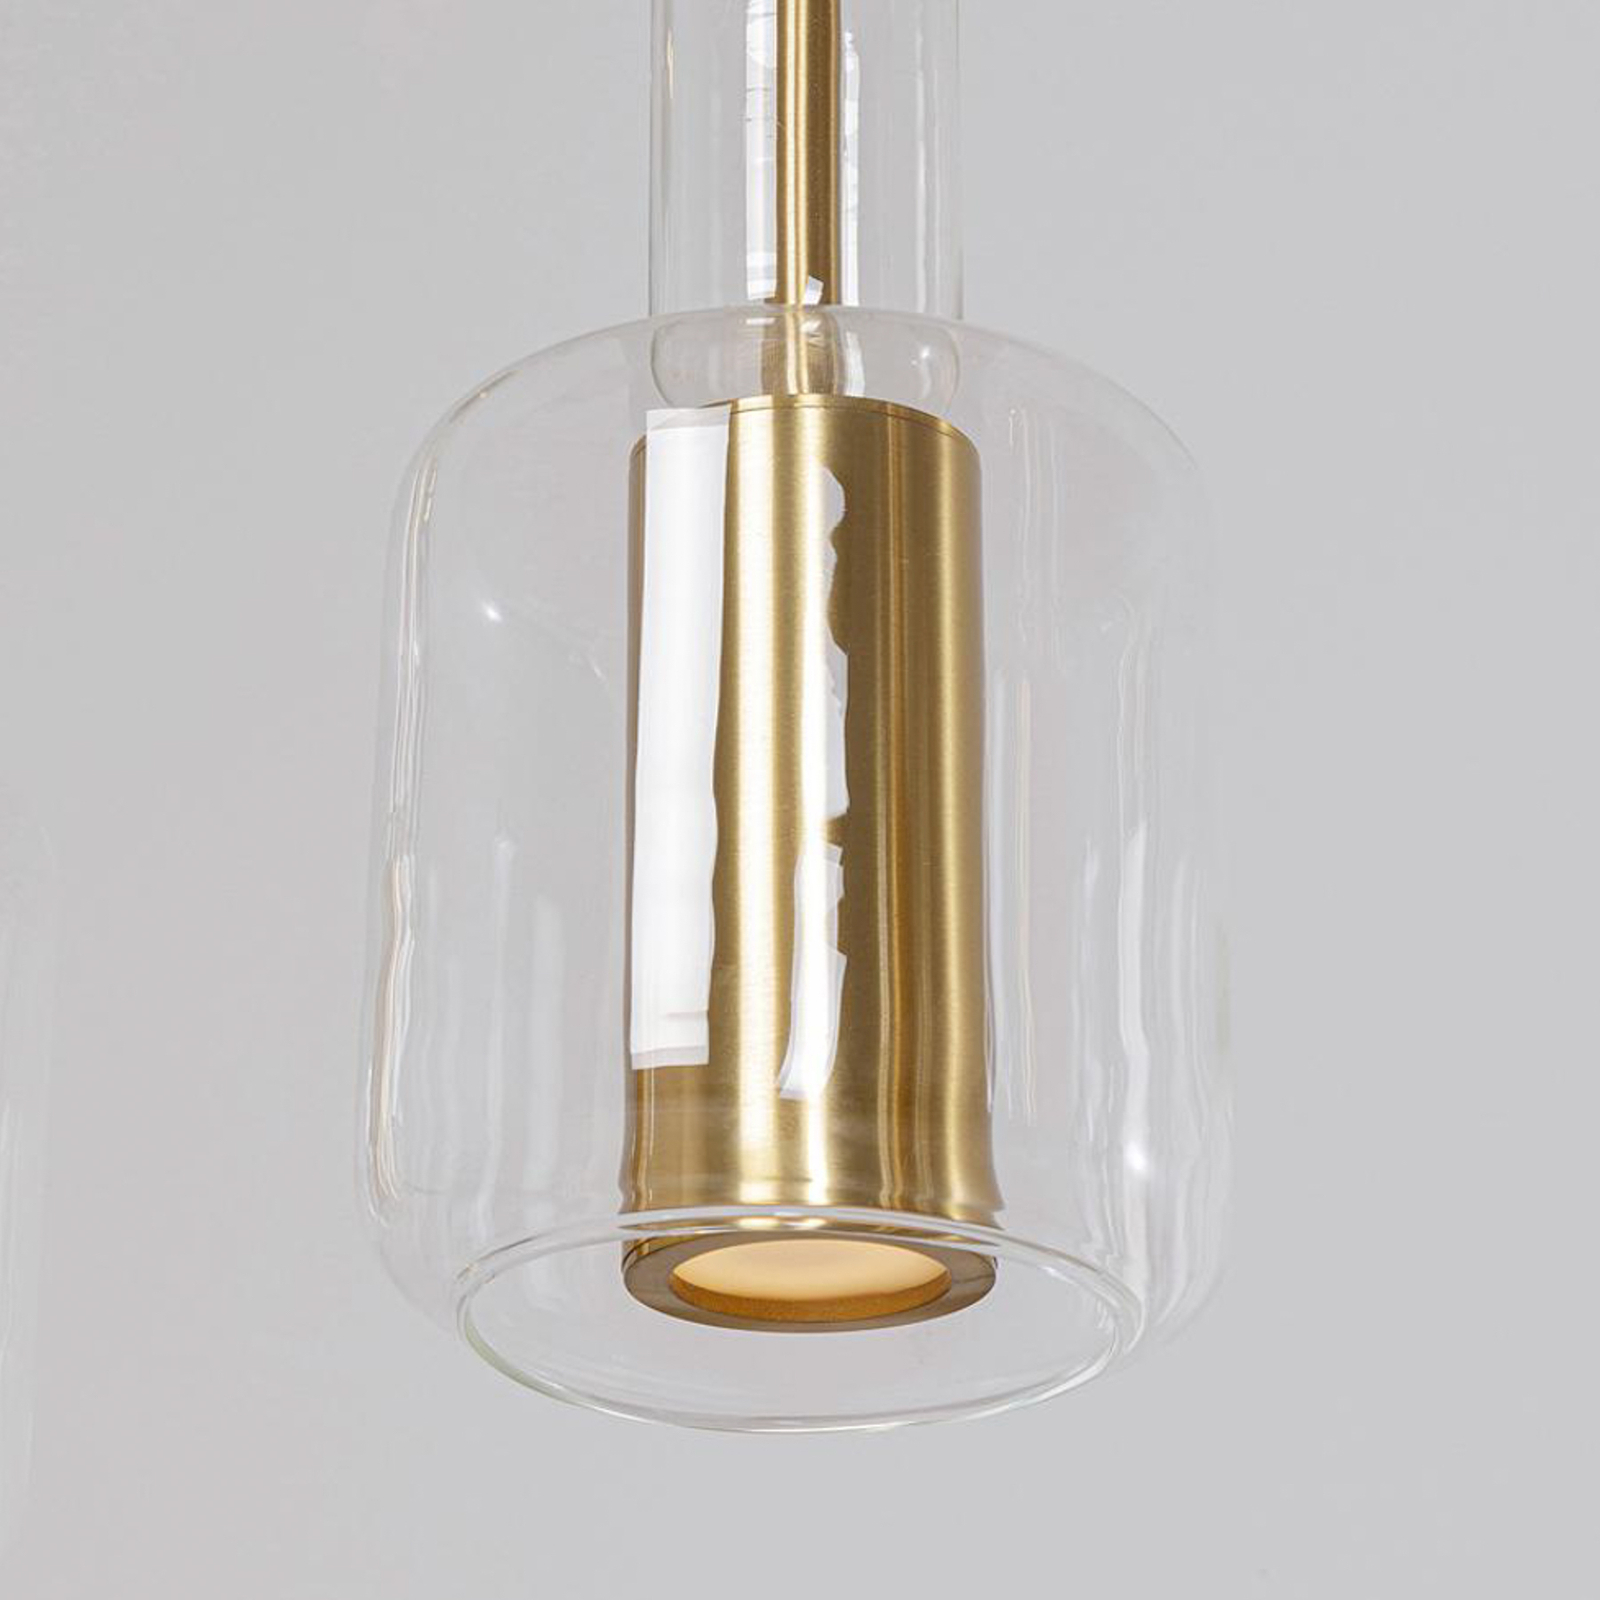 KARE Candy Bar pendant light, gold-coloured, steel, glass, 5-bulb.